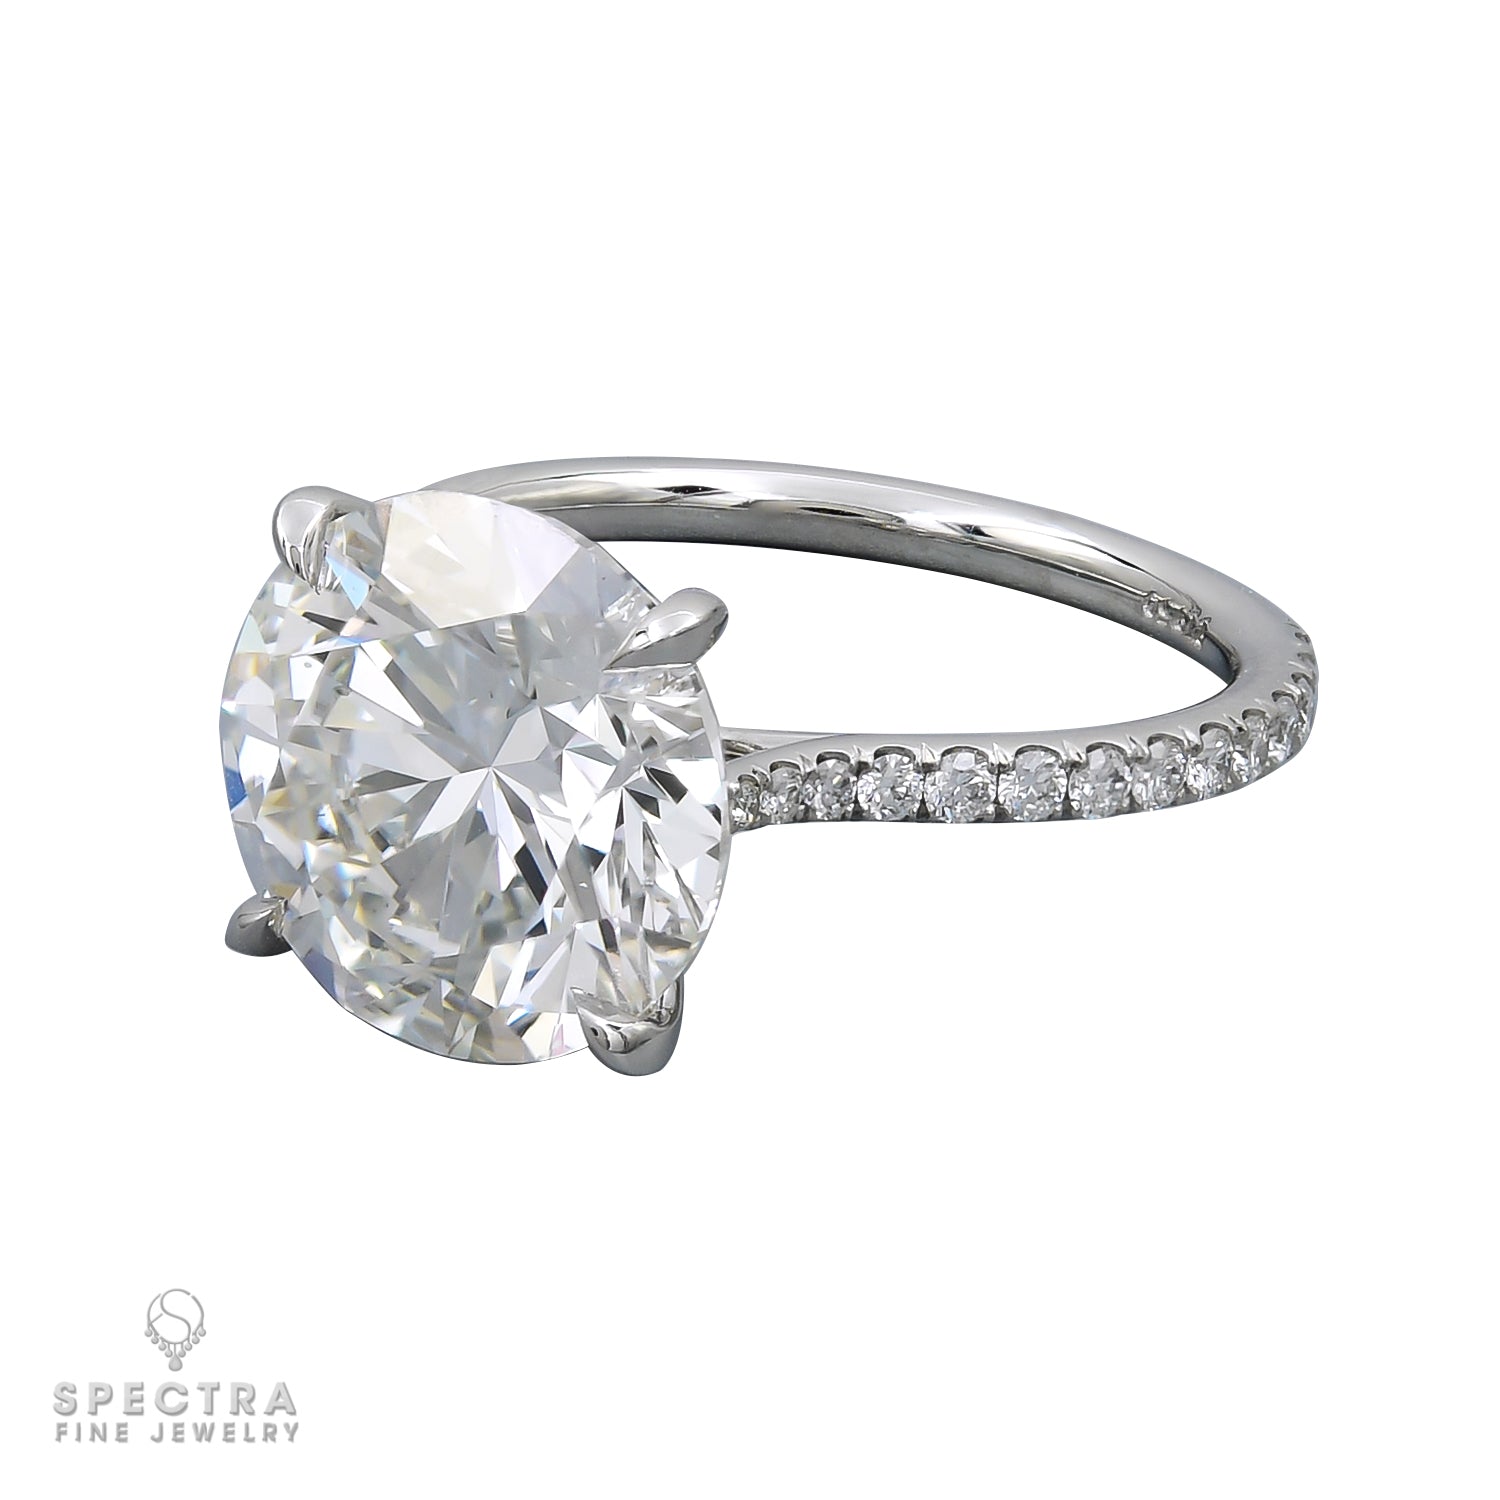 Spectra Fine Jewelry 5.31ct Round Diamond and Platinum Engagement Ring